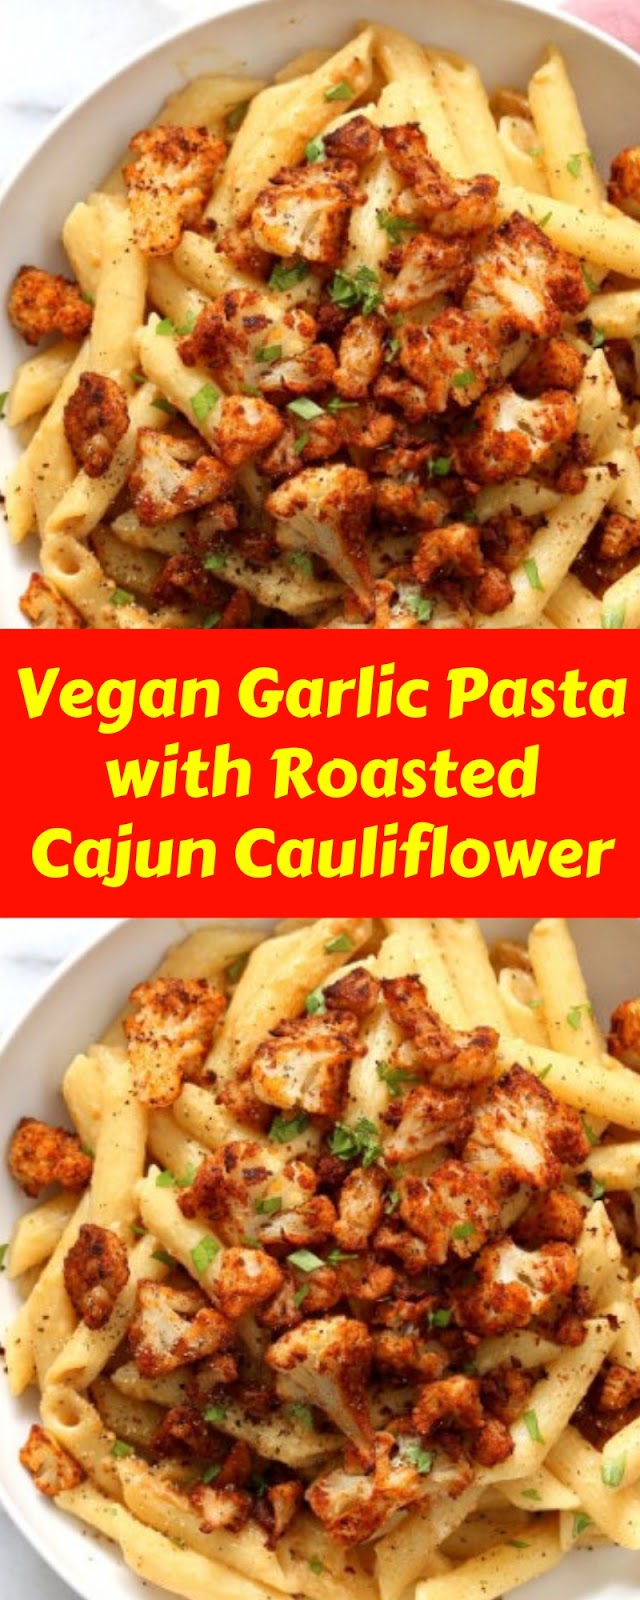 Vegan Garlic Pasta with Roasted Cajun Cauliflower